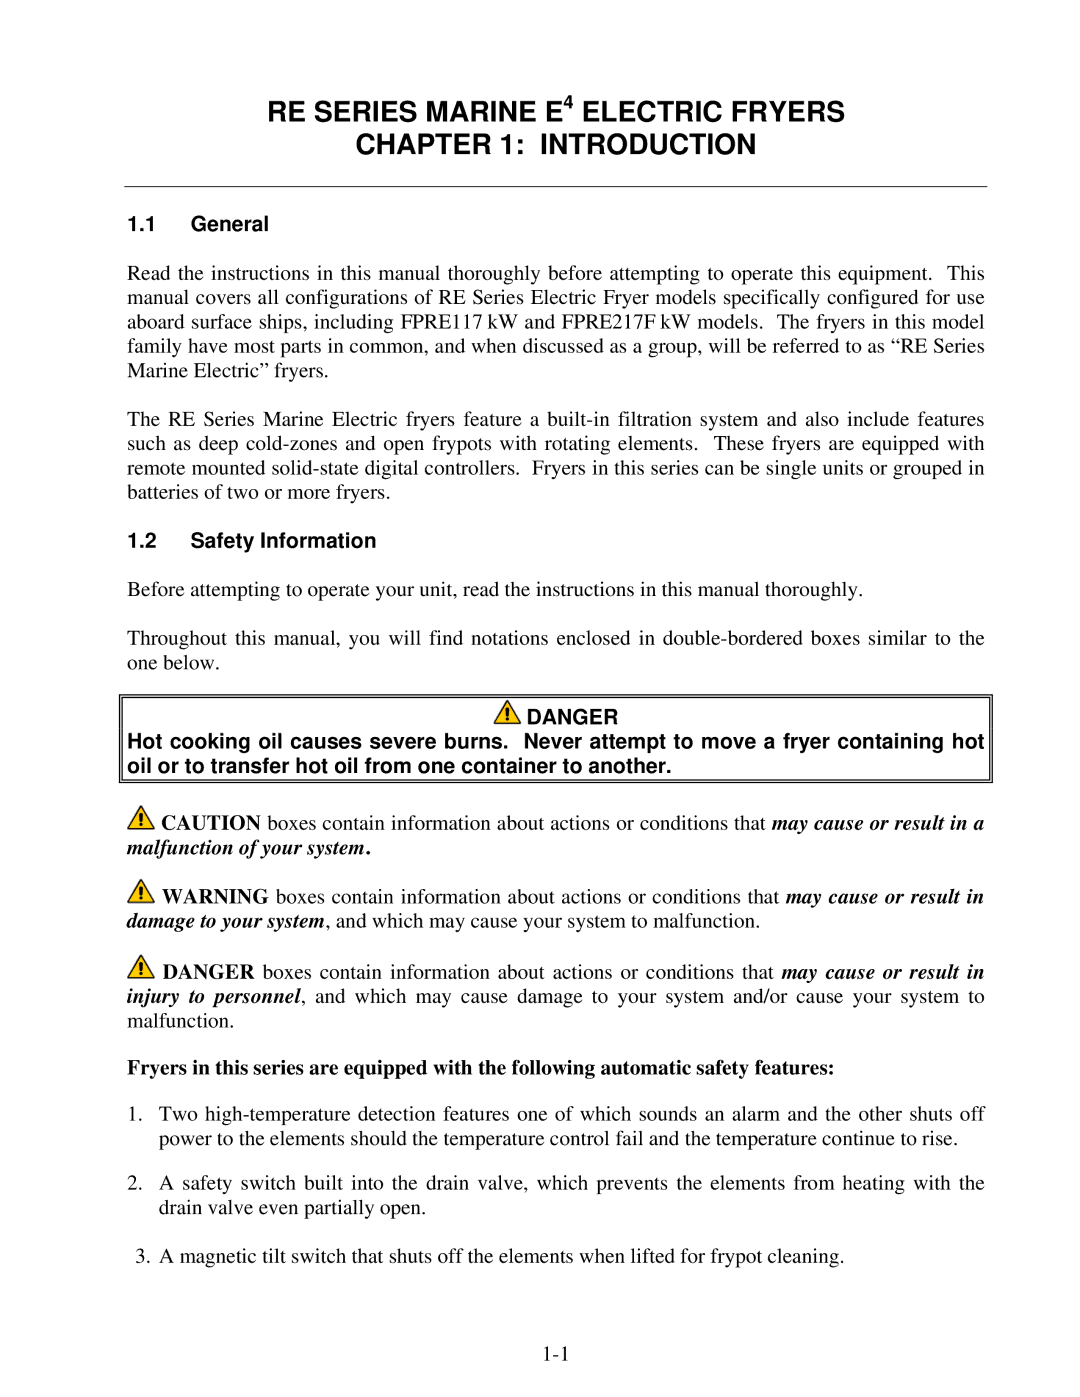 Frymaster E4 manual General, Safety Information 